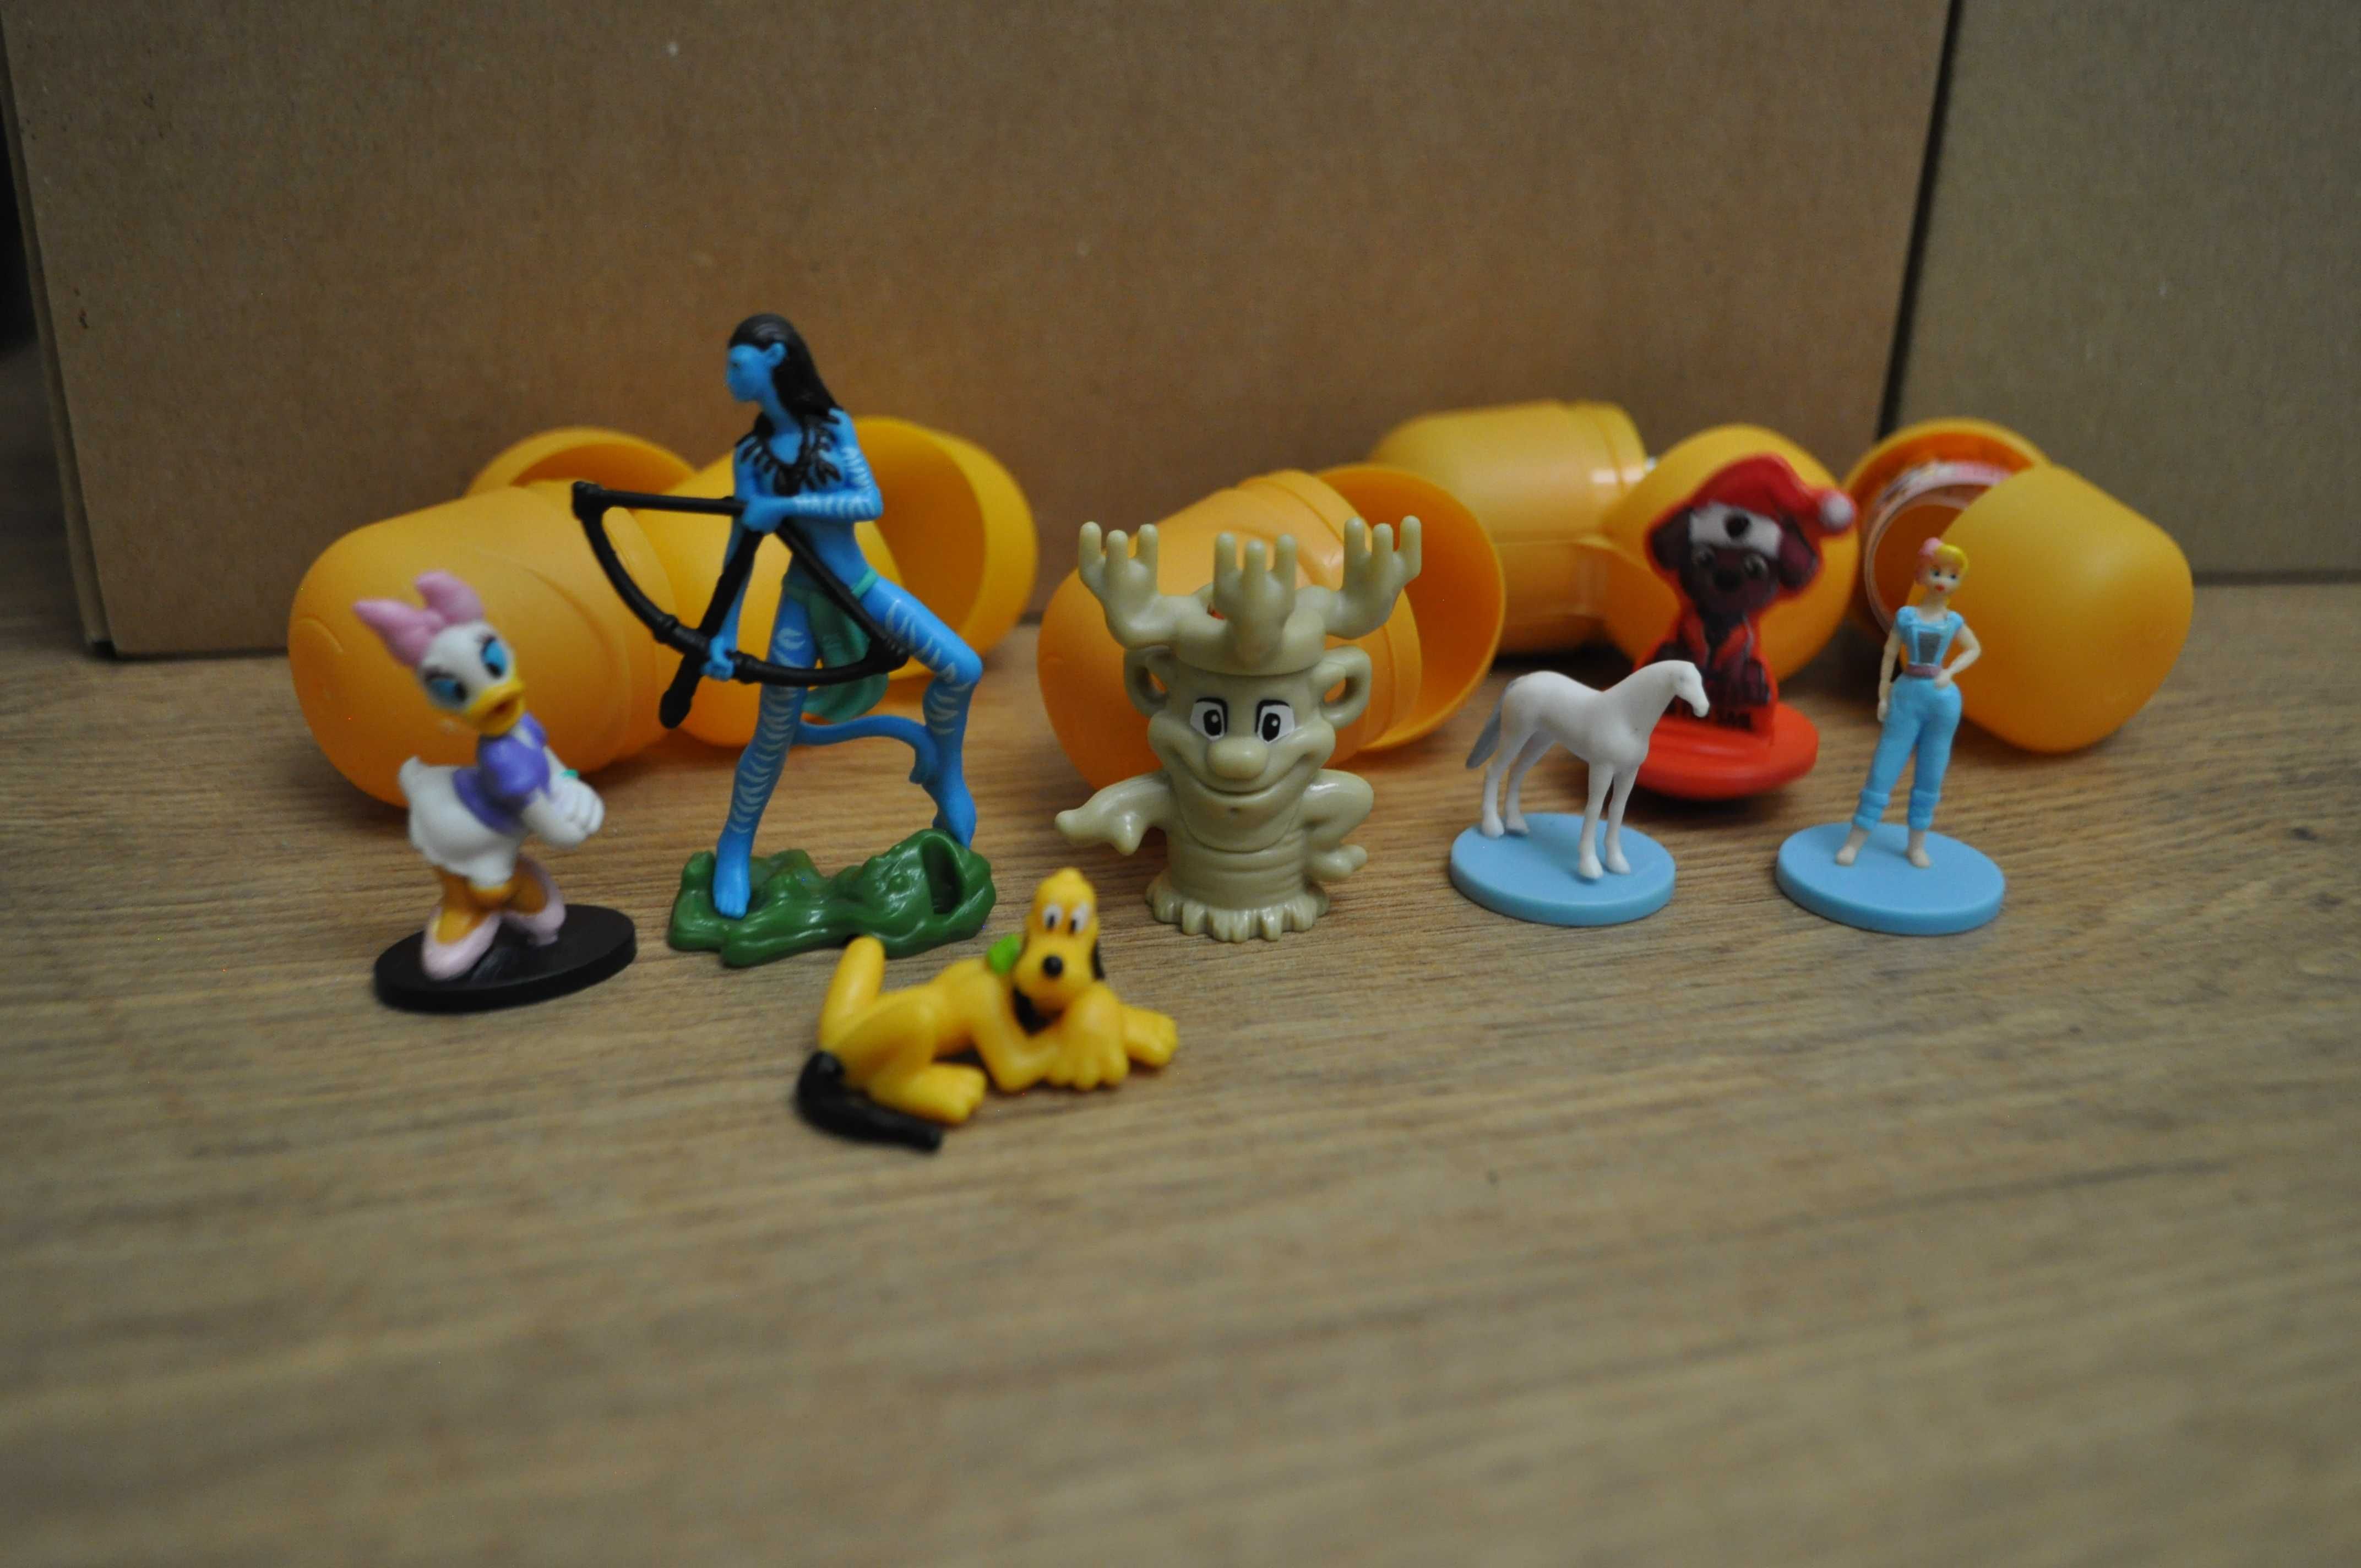 Małe zabawki, figurki, postacie z bajek (kinder jajka)